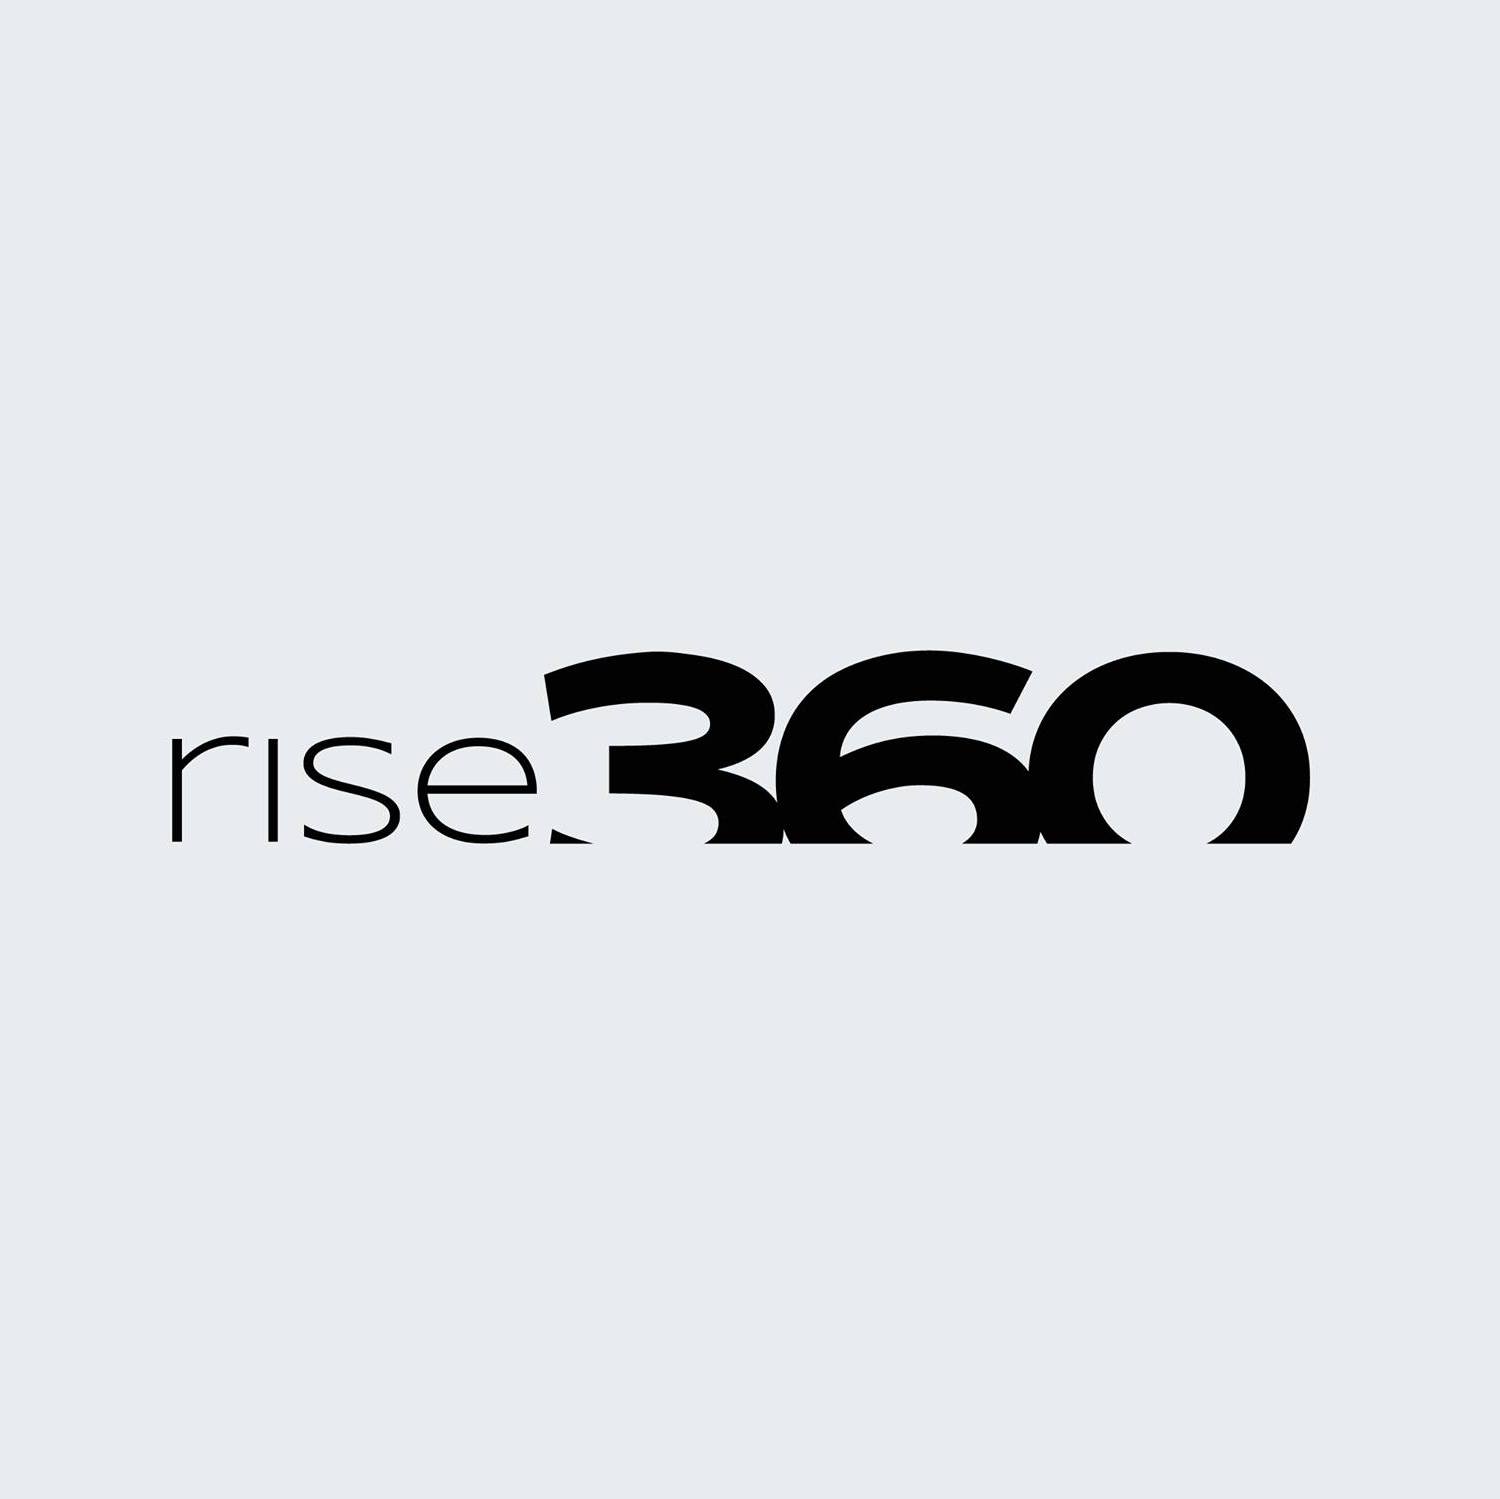 Rise360